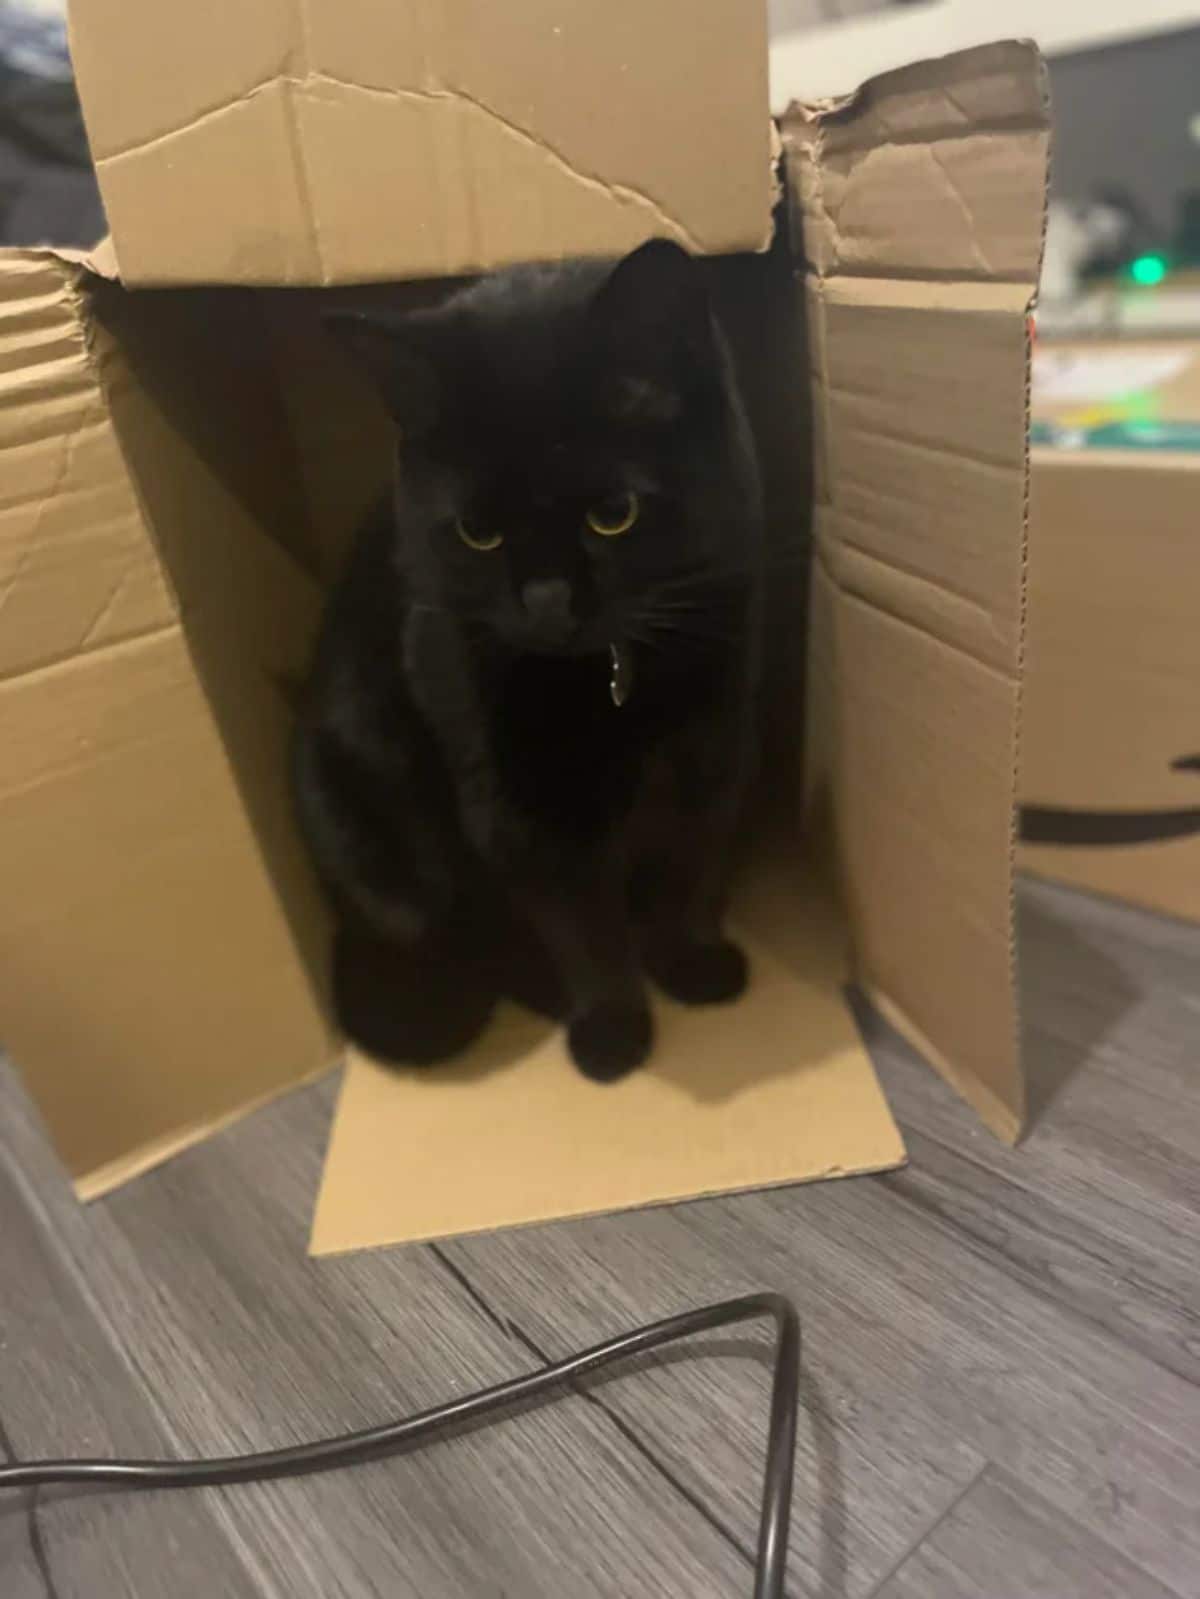 black cat sitting inside a brown cardboard box on its side